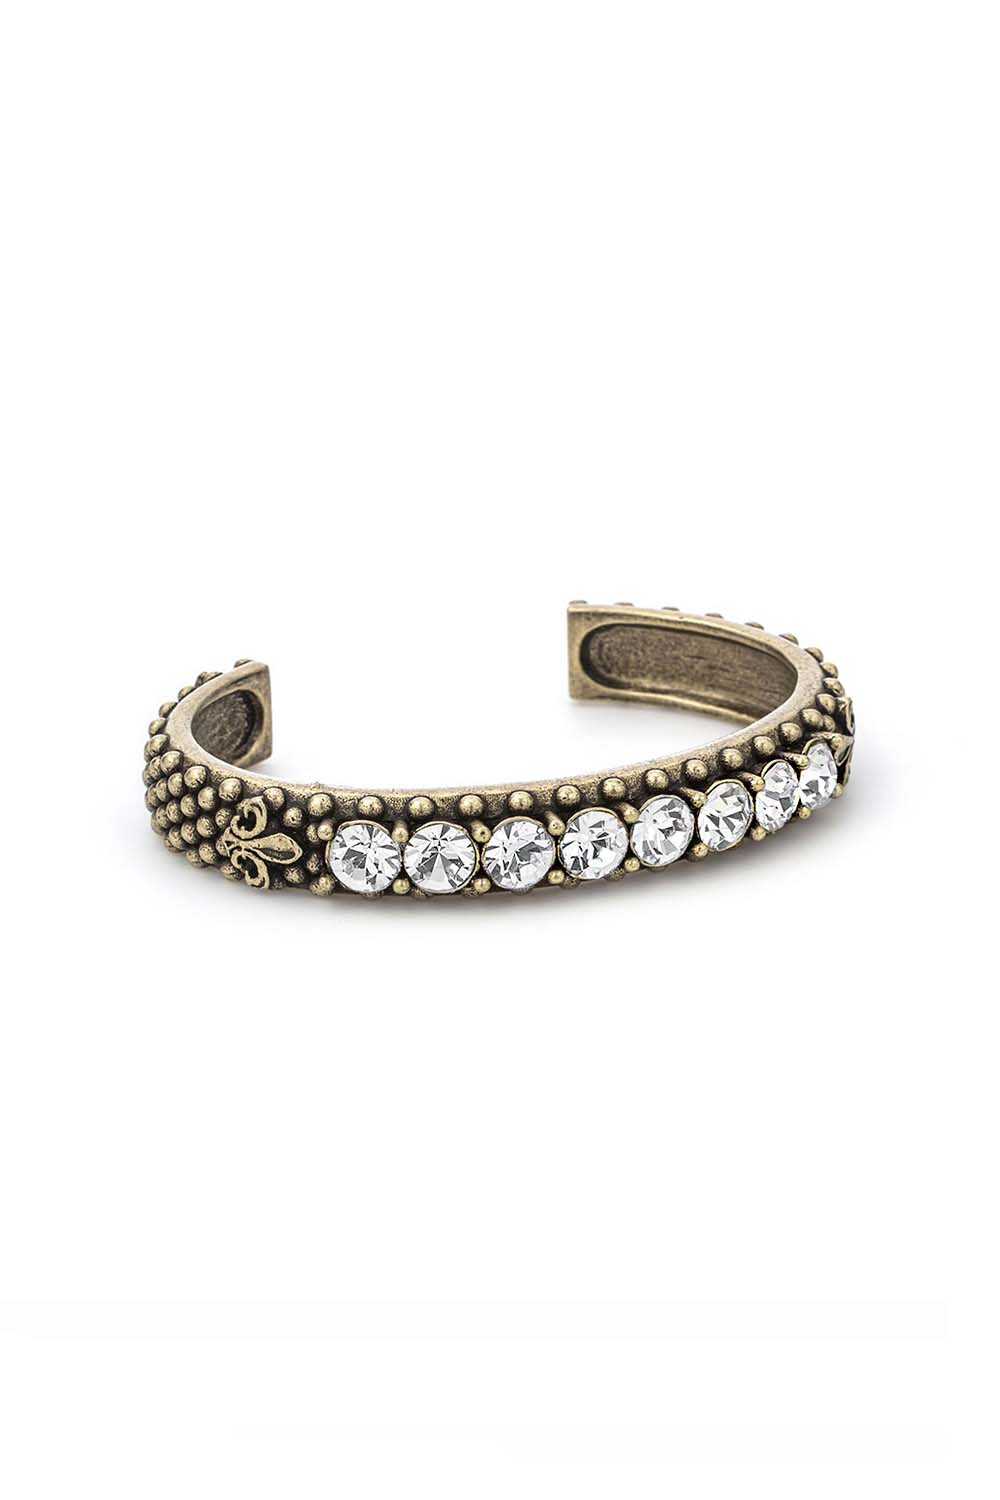 Cuff Bracelet with Austrian Crystal